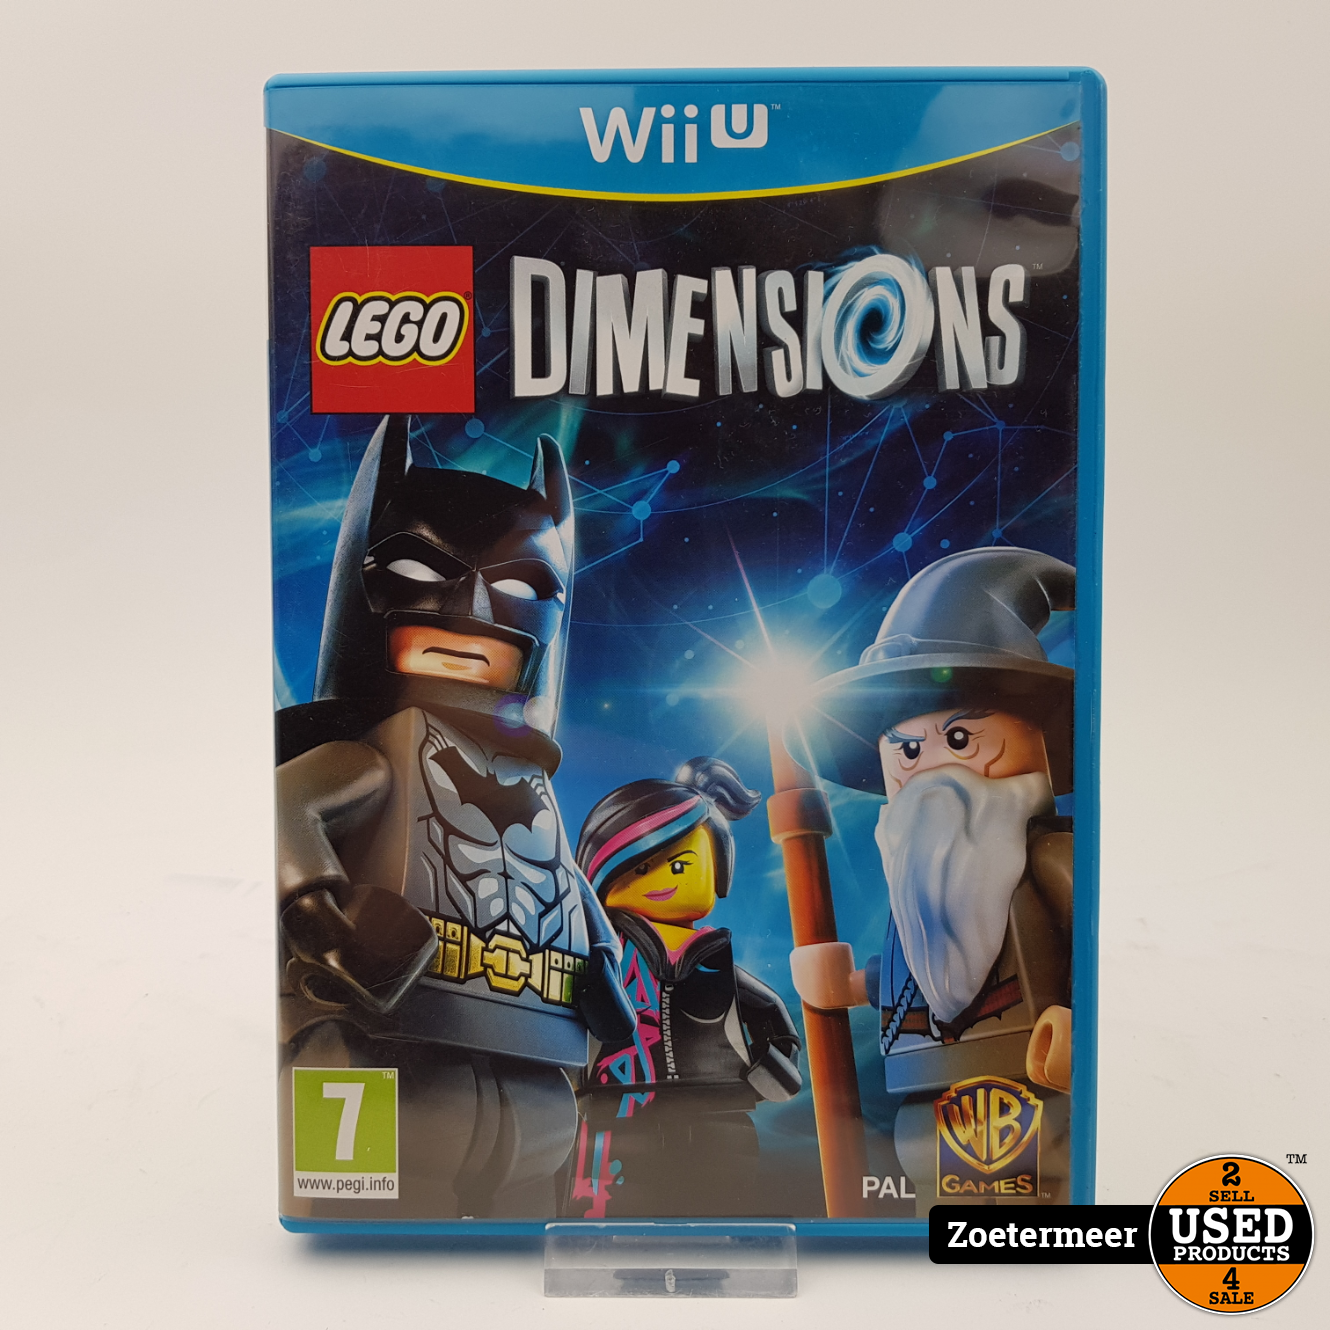 vergaan Beperkt Overwinnen Lego Dimensions Wii U - Used Products Zoetermeer